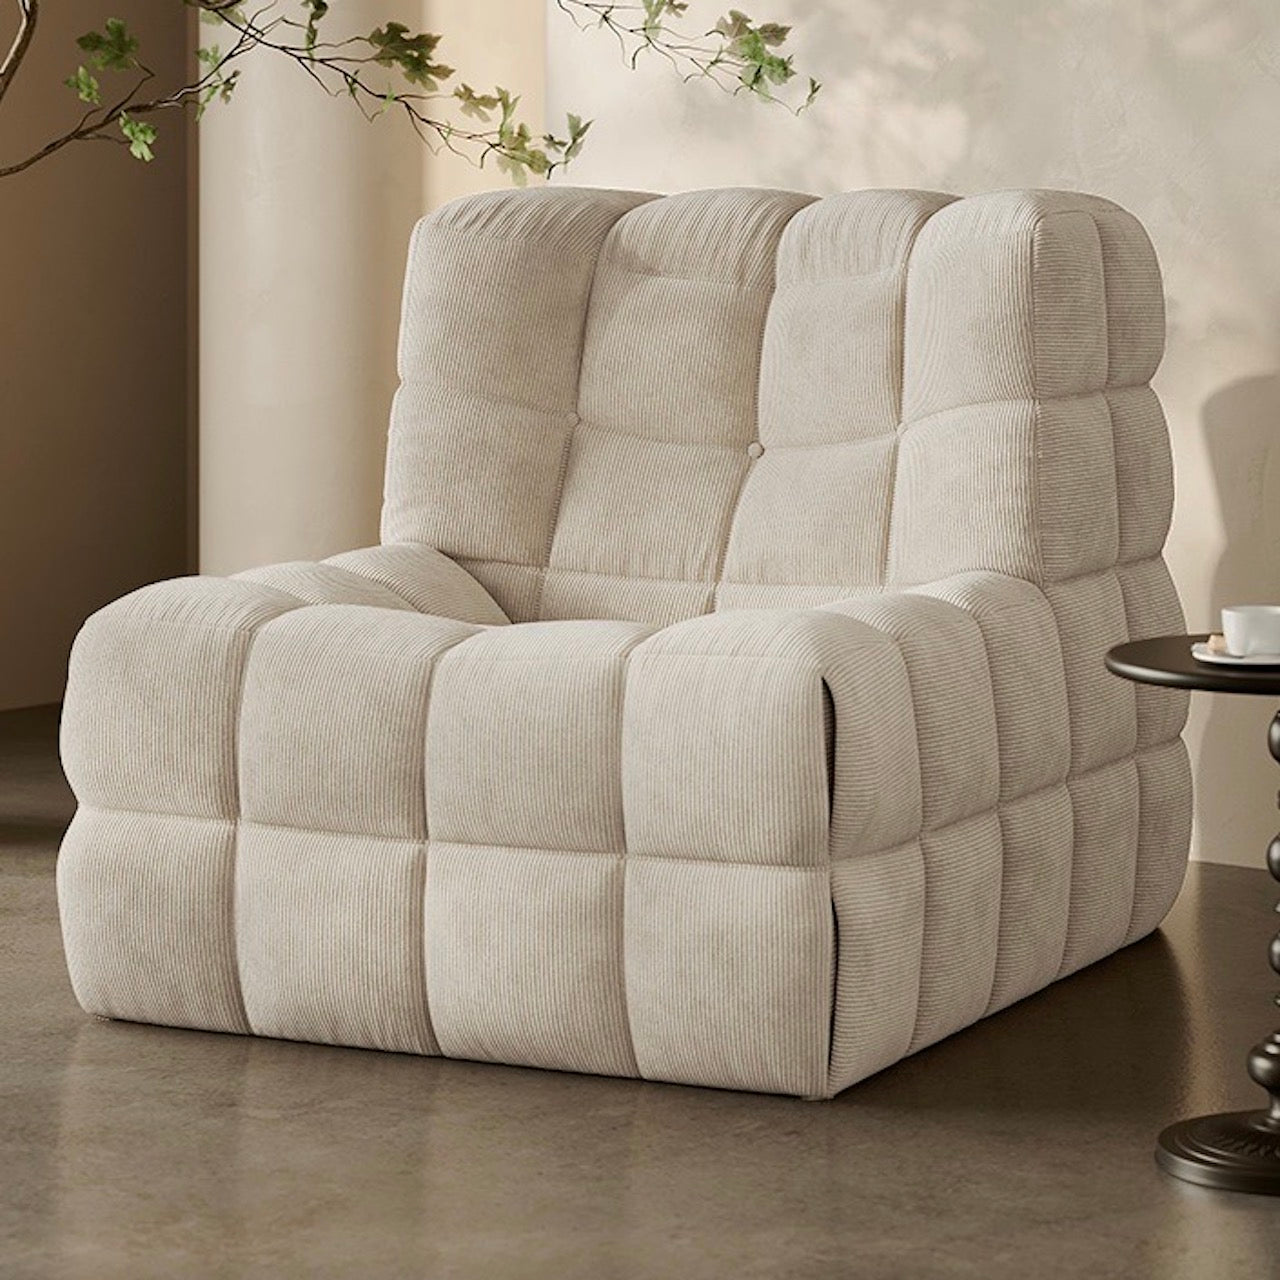 Vintage Beige corduroy single sofa with retro tofu block design in a lounge setting